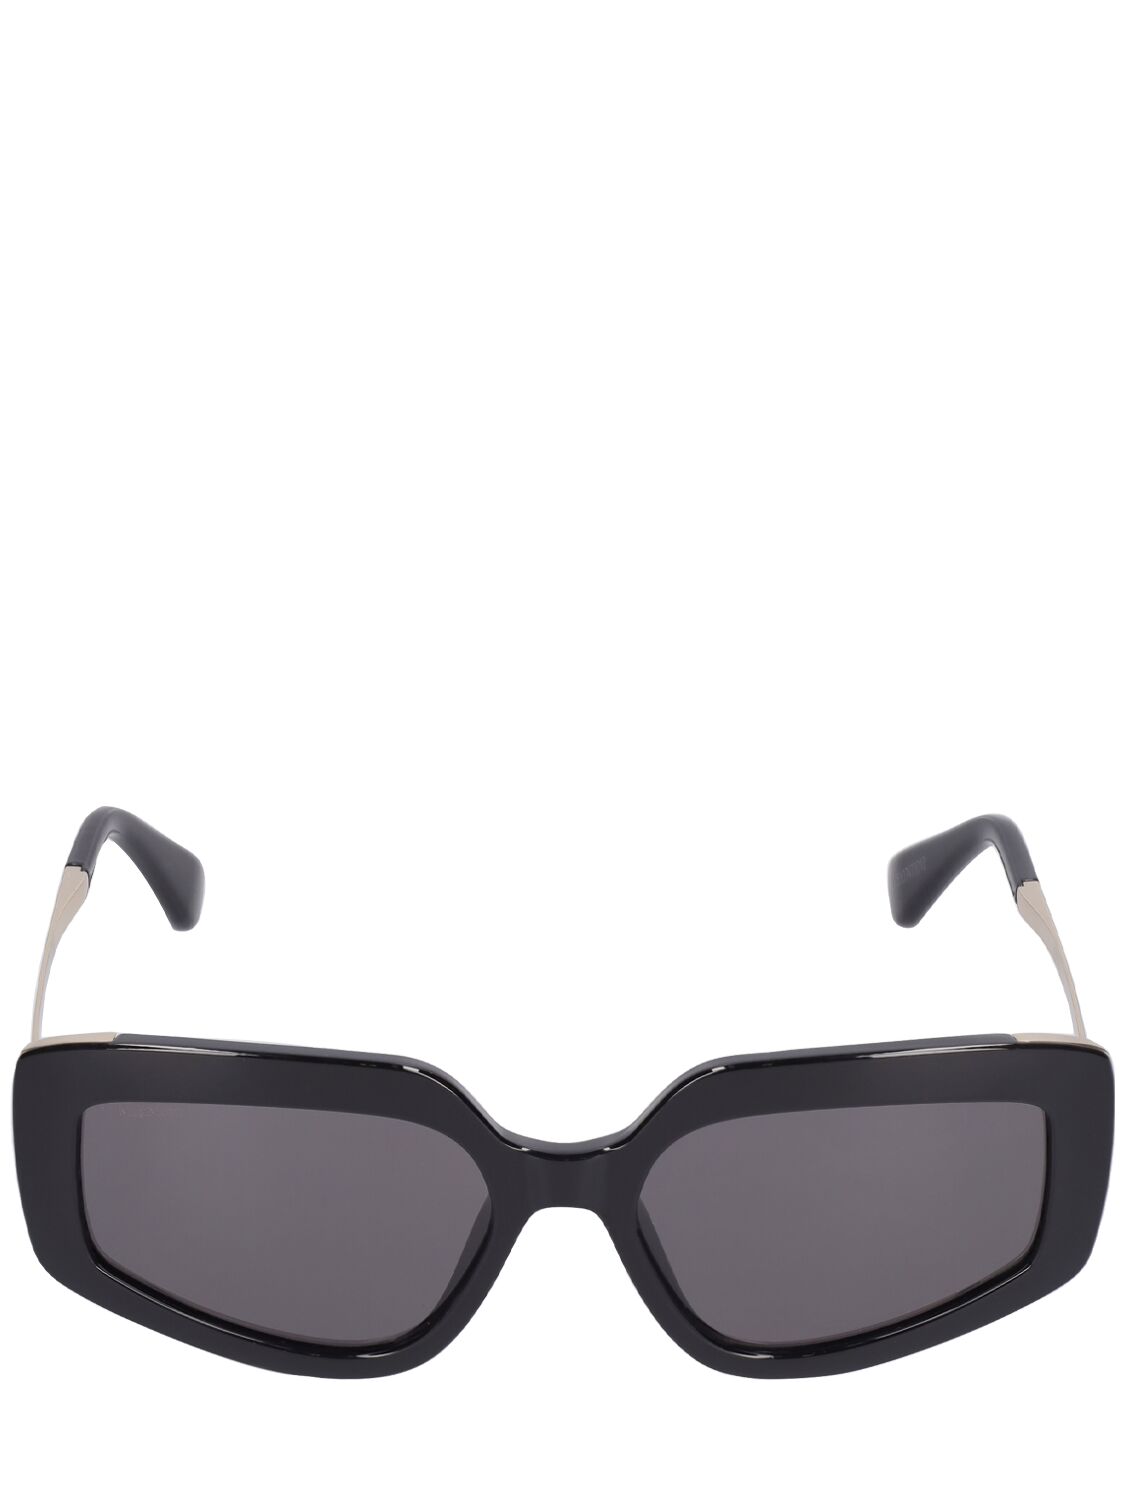 Image of Design 7 Geometric Sunglasses